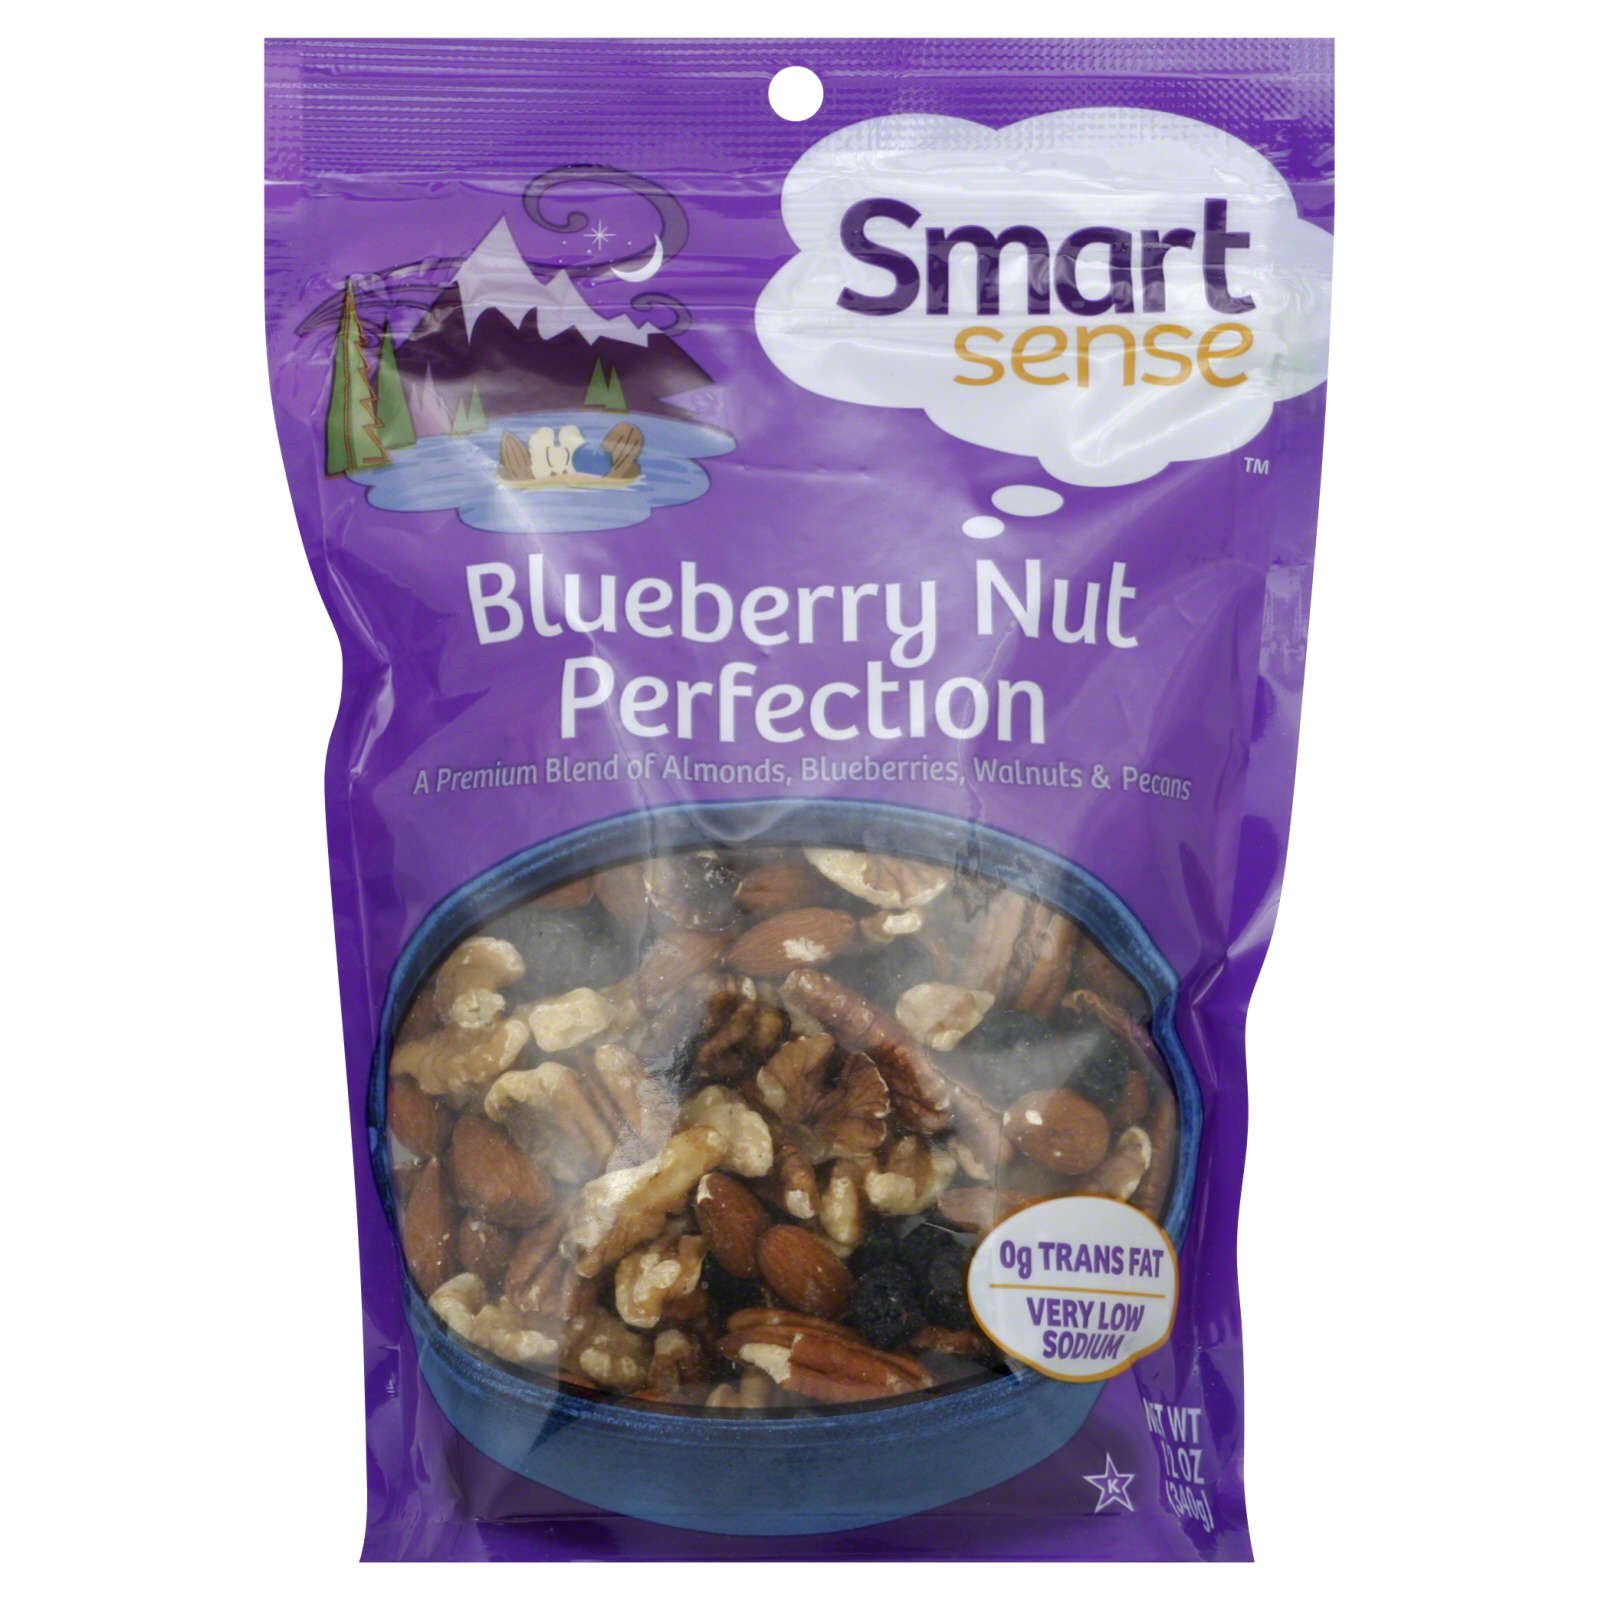 Smart Sense Blueberry Nut Perfection 12 oz (340 g)